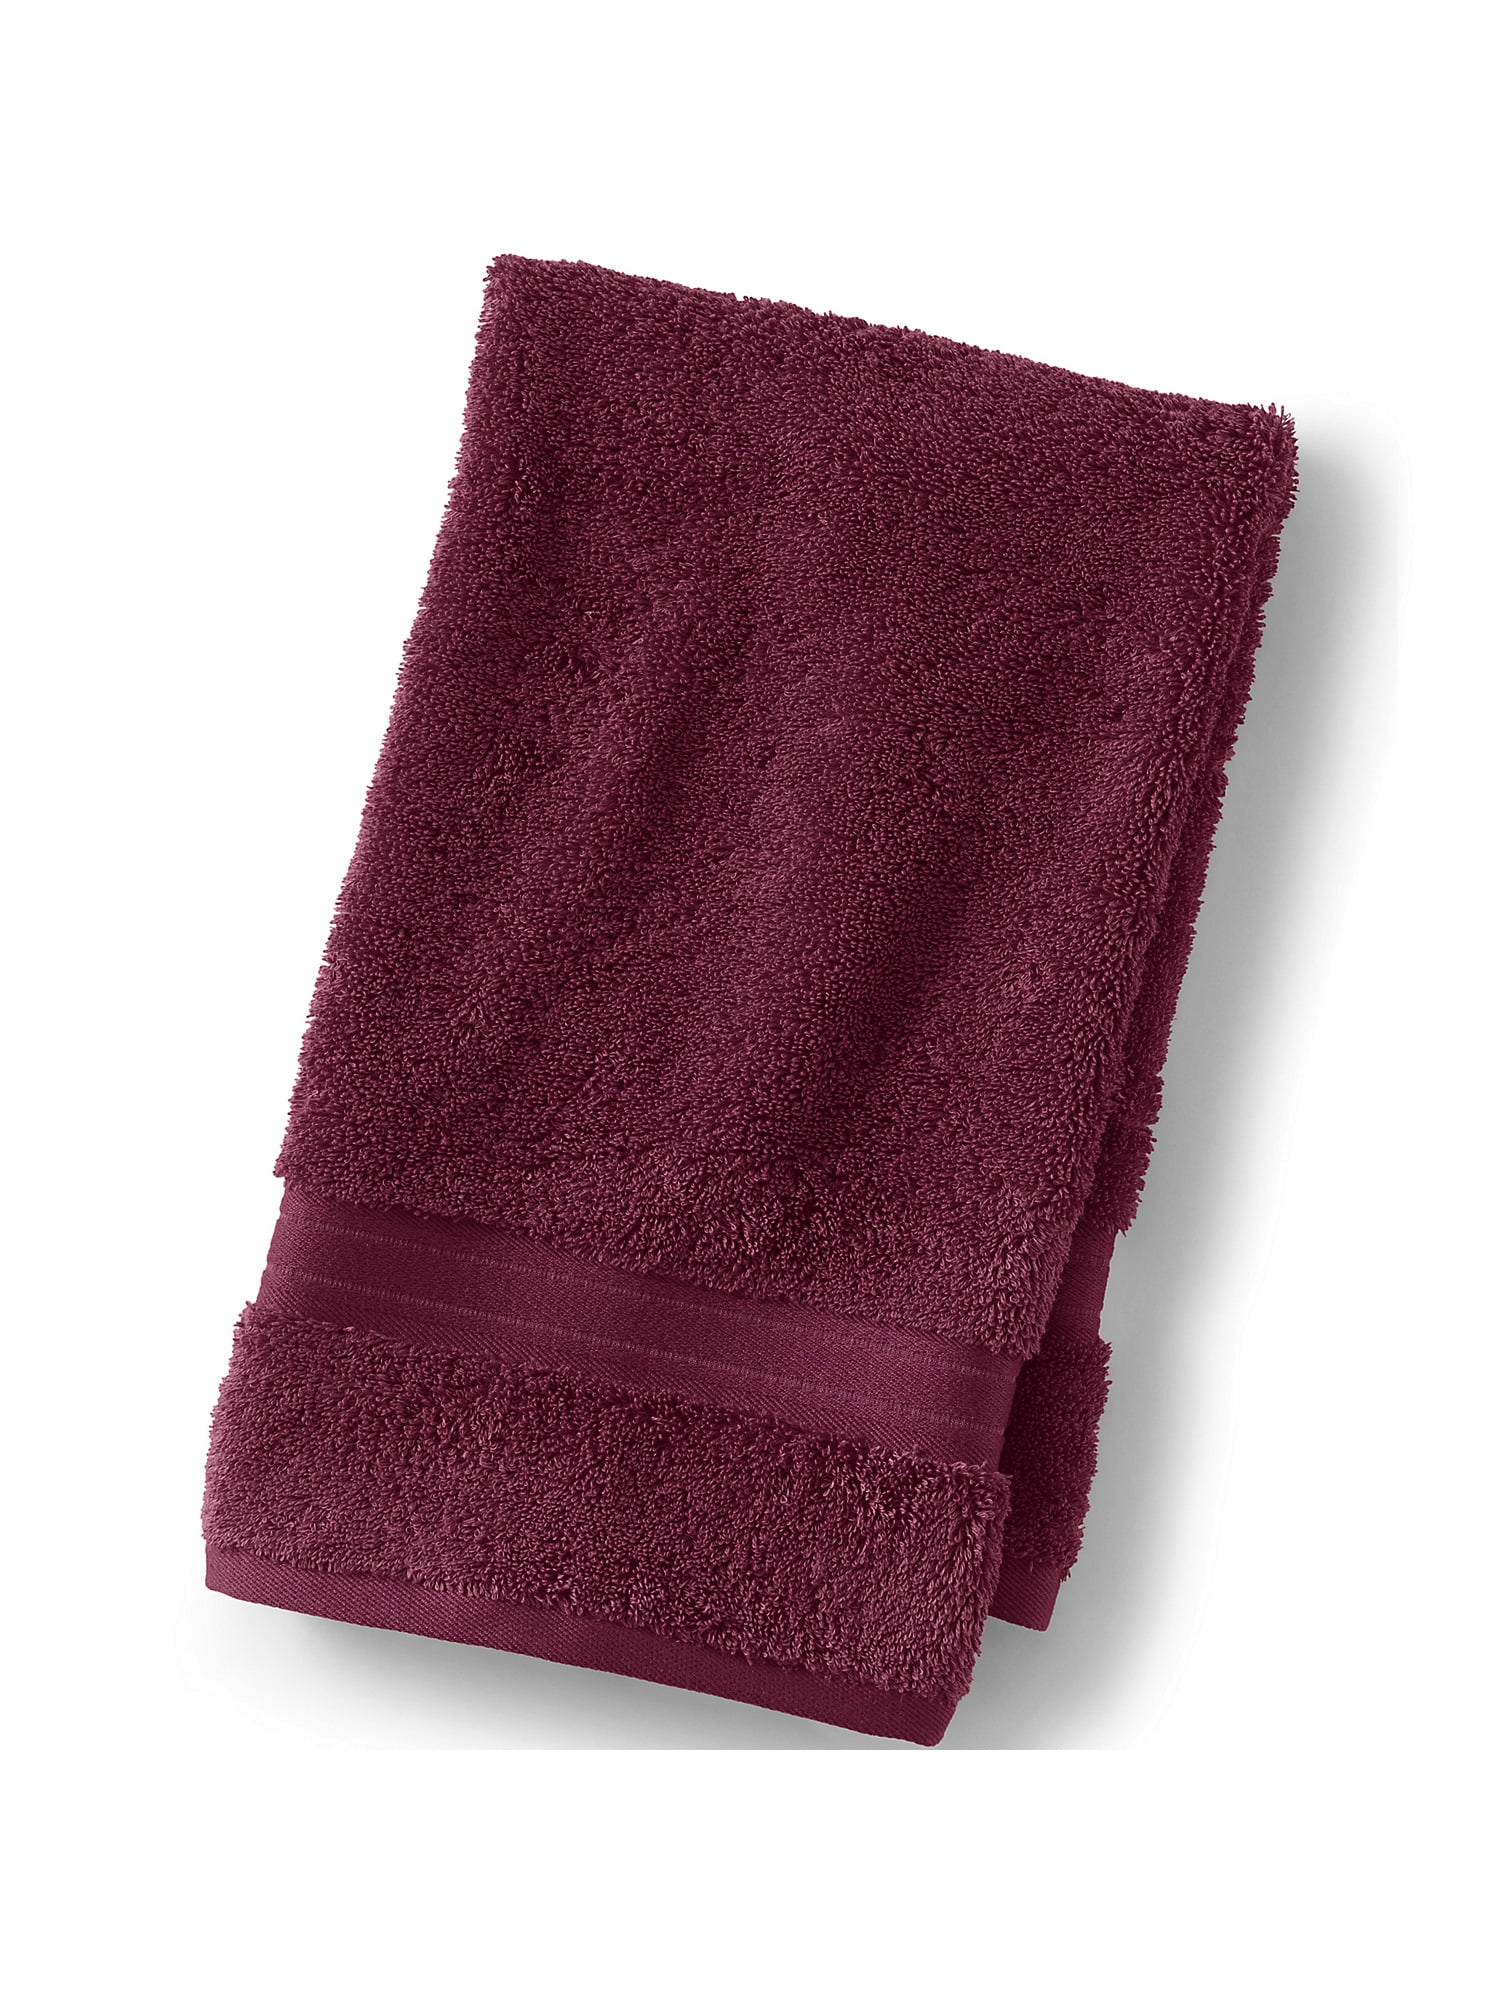 Elaine Karen Premium Cotton Bath Hand Towels for Home, Hotel & Spa